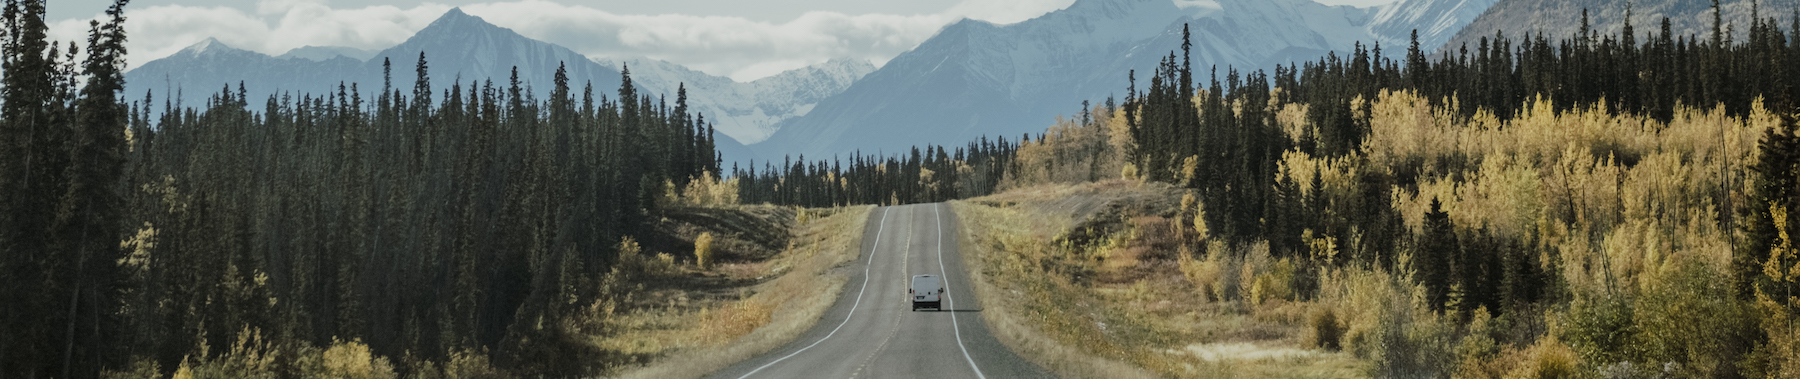 Voyage en van au Yukon: un road trip plus grand que nature